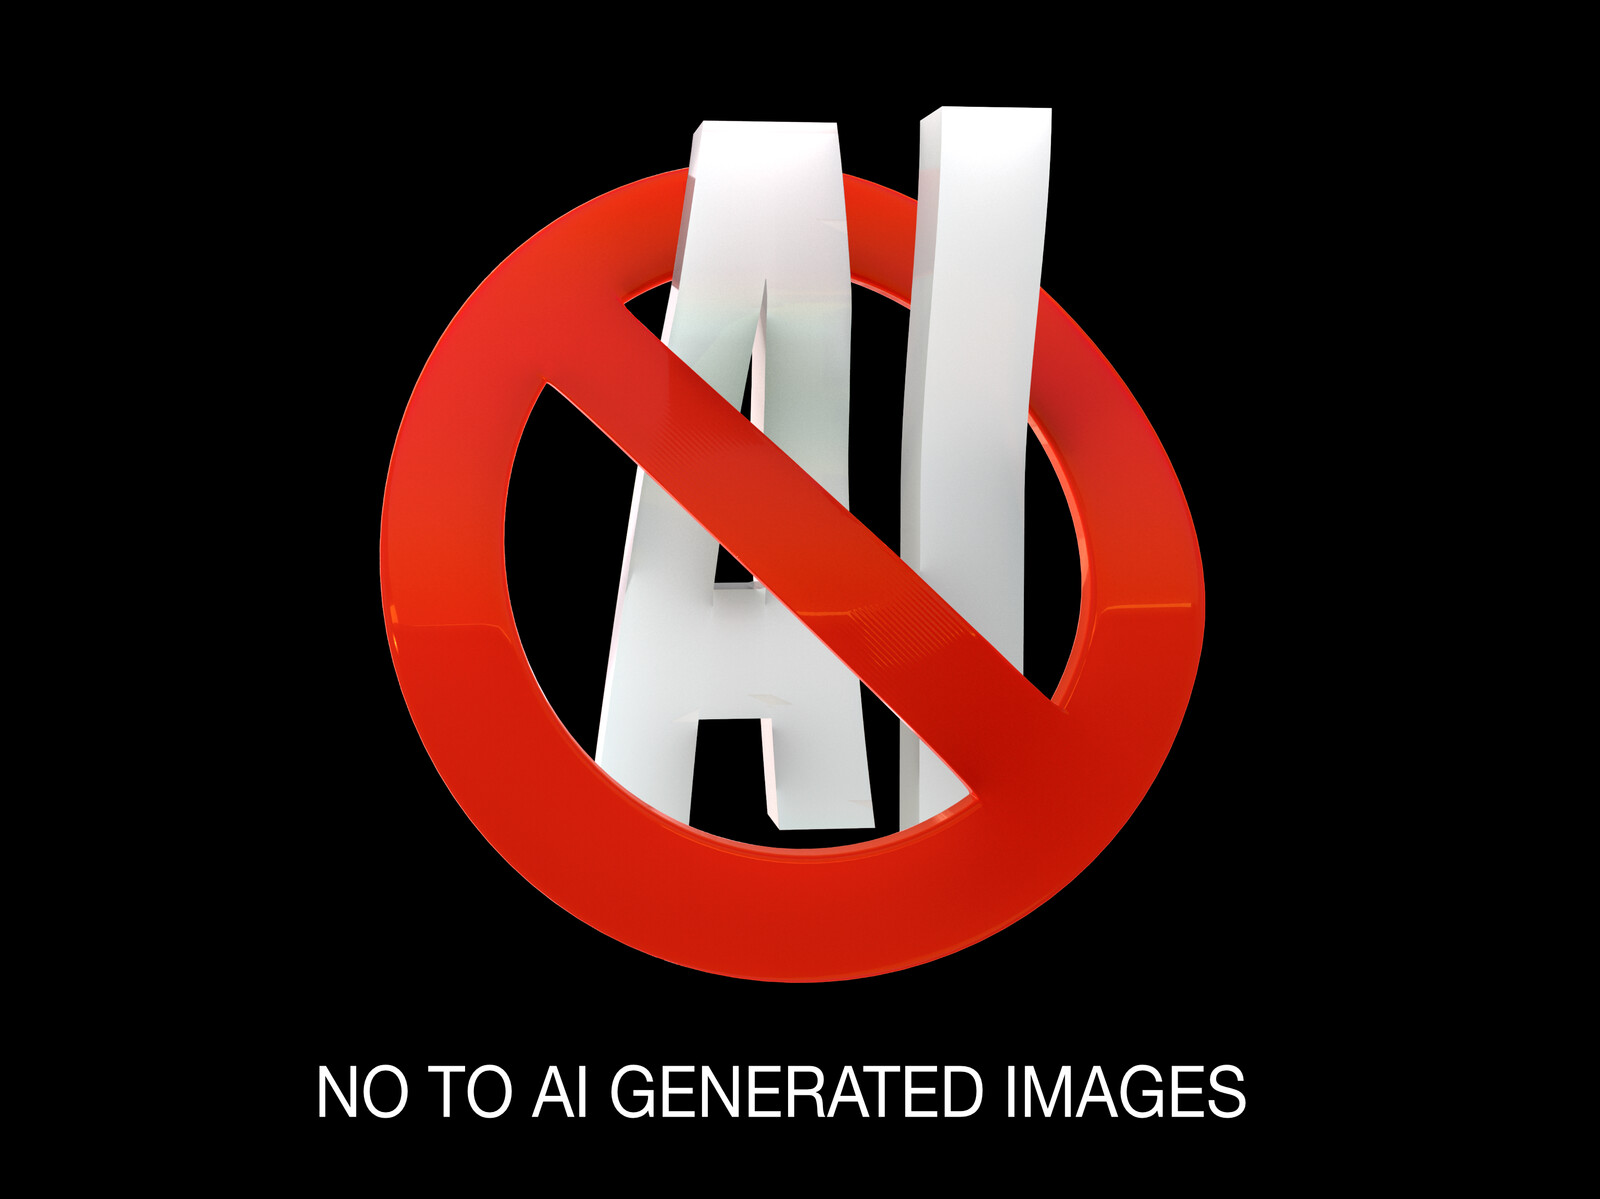 No to AI Images